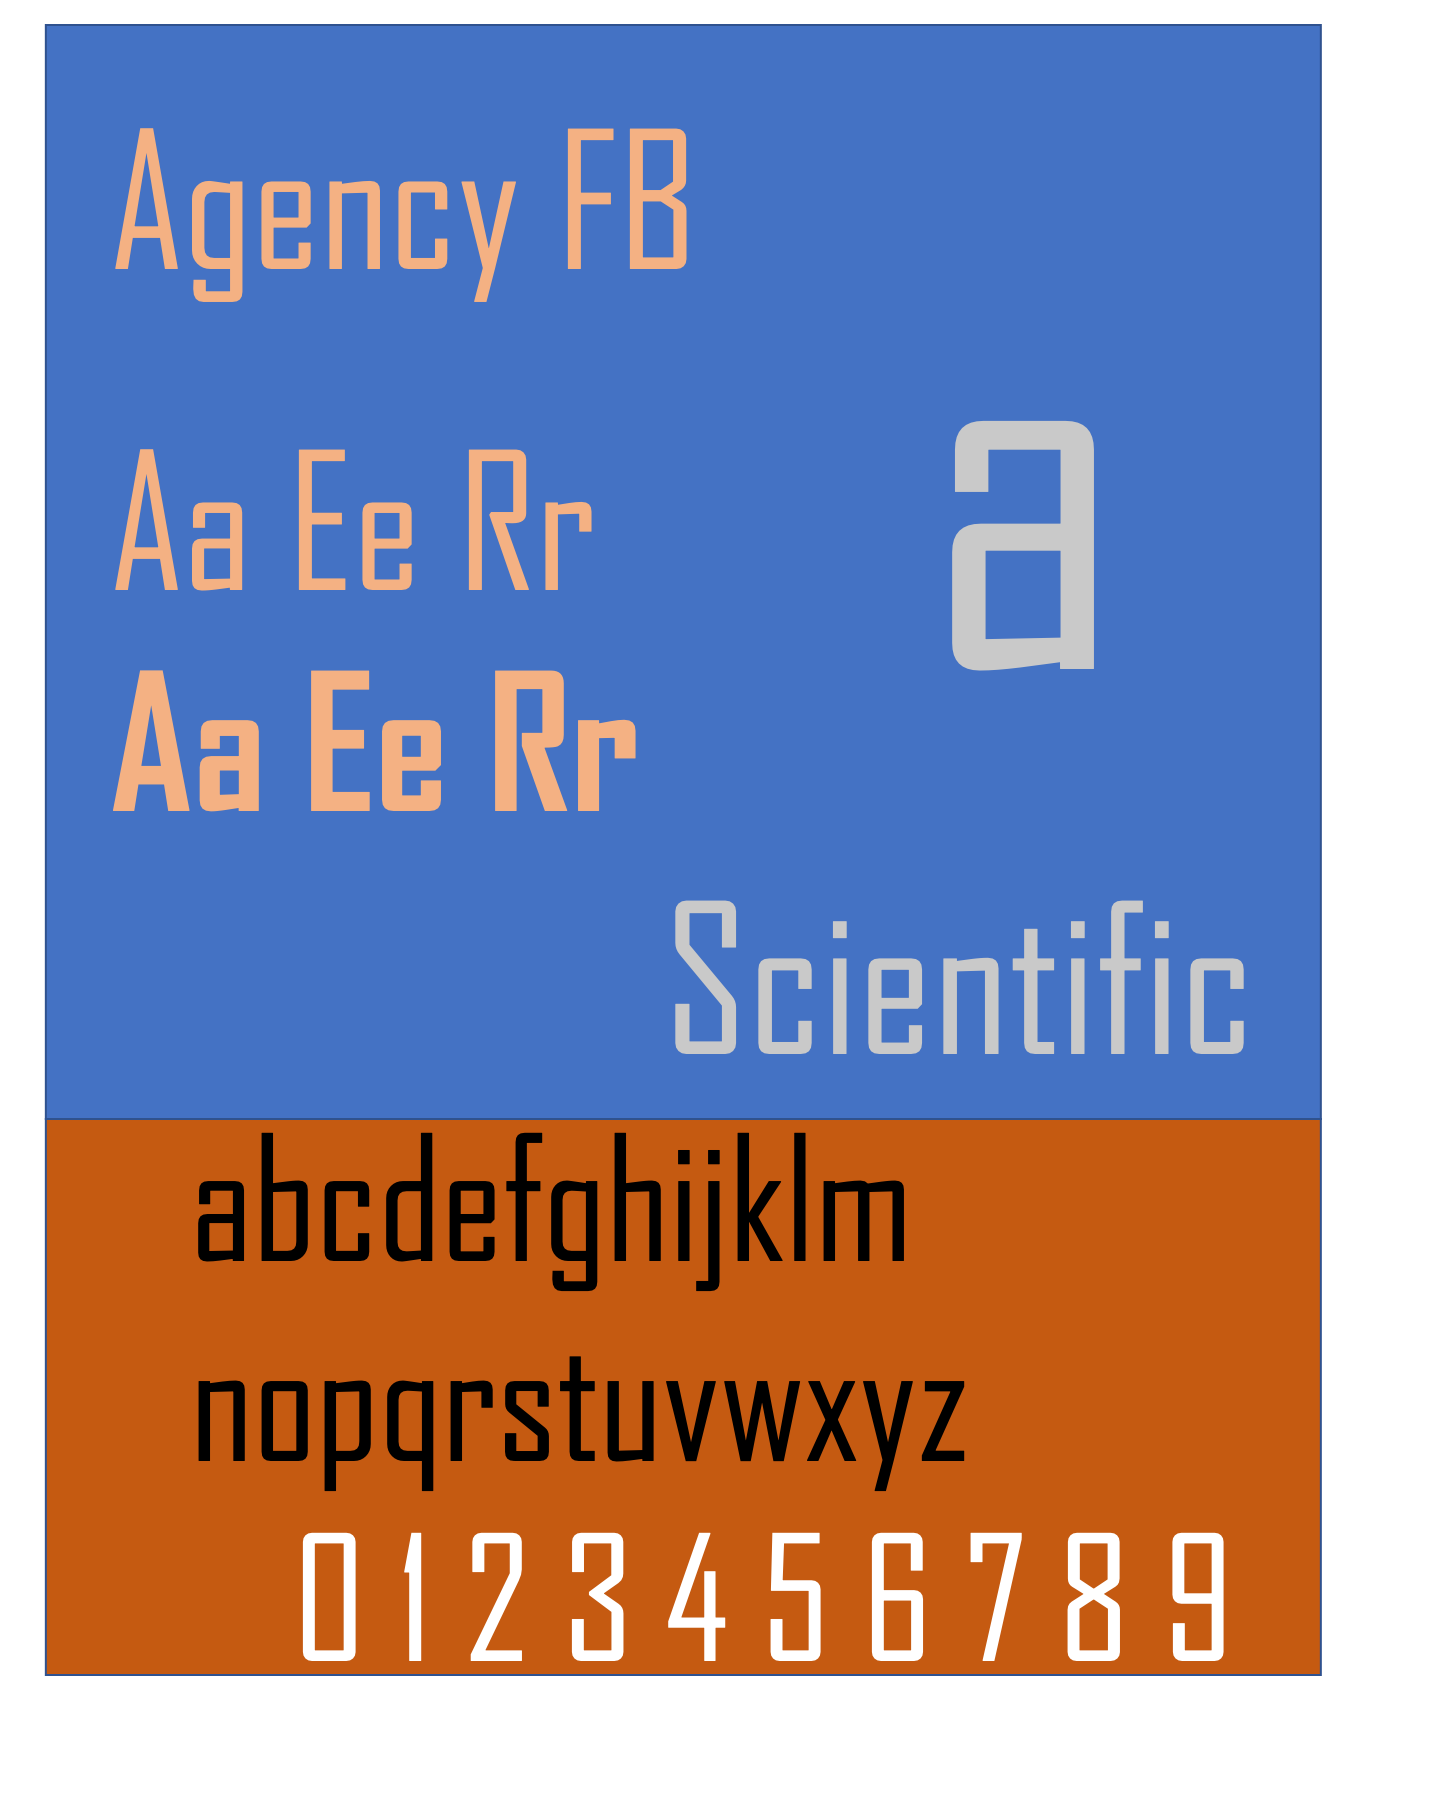 Agency fb lettertype monster PNG